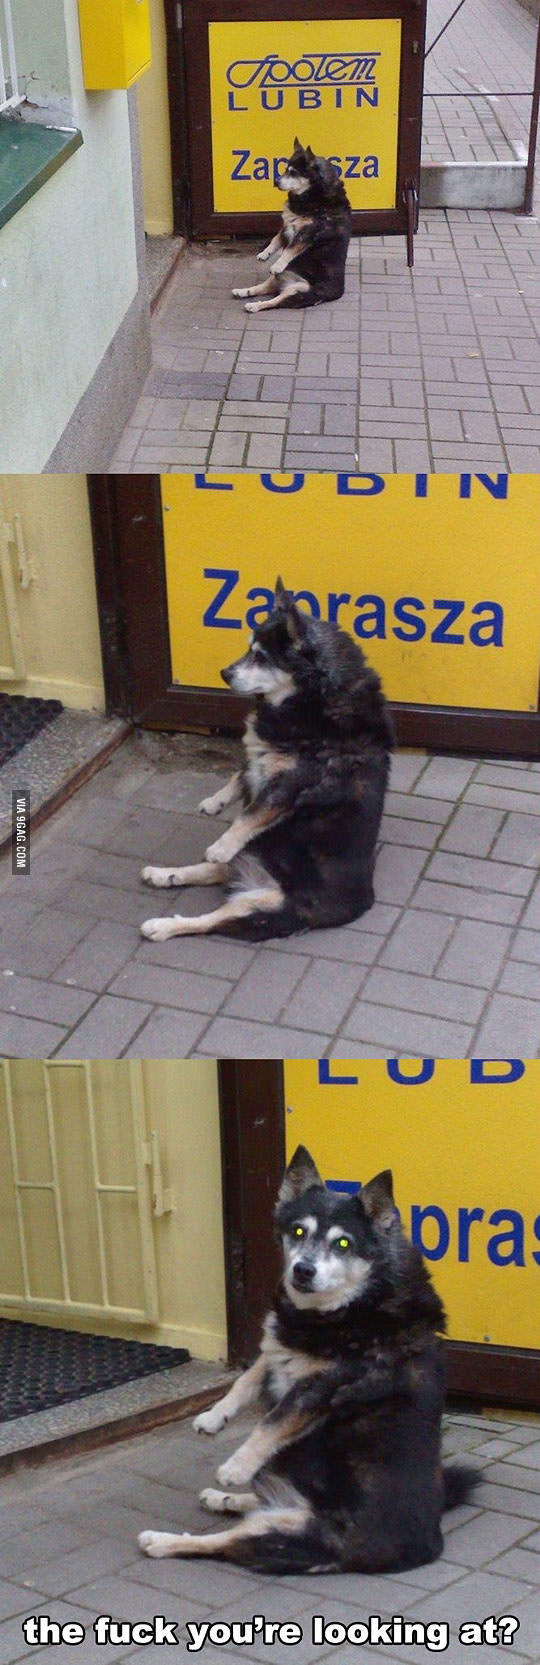 That dog is waiting like a boss - meme